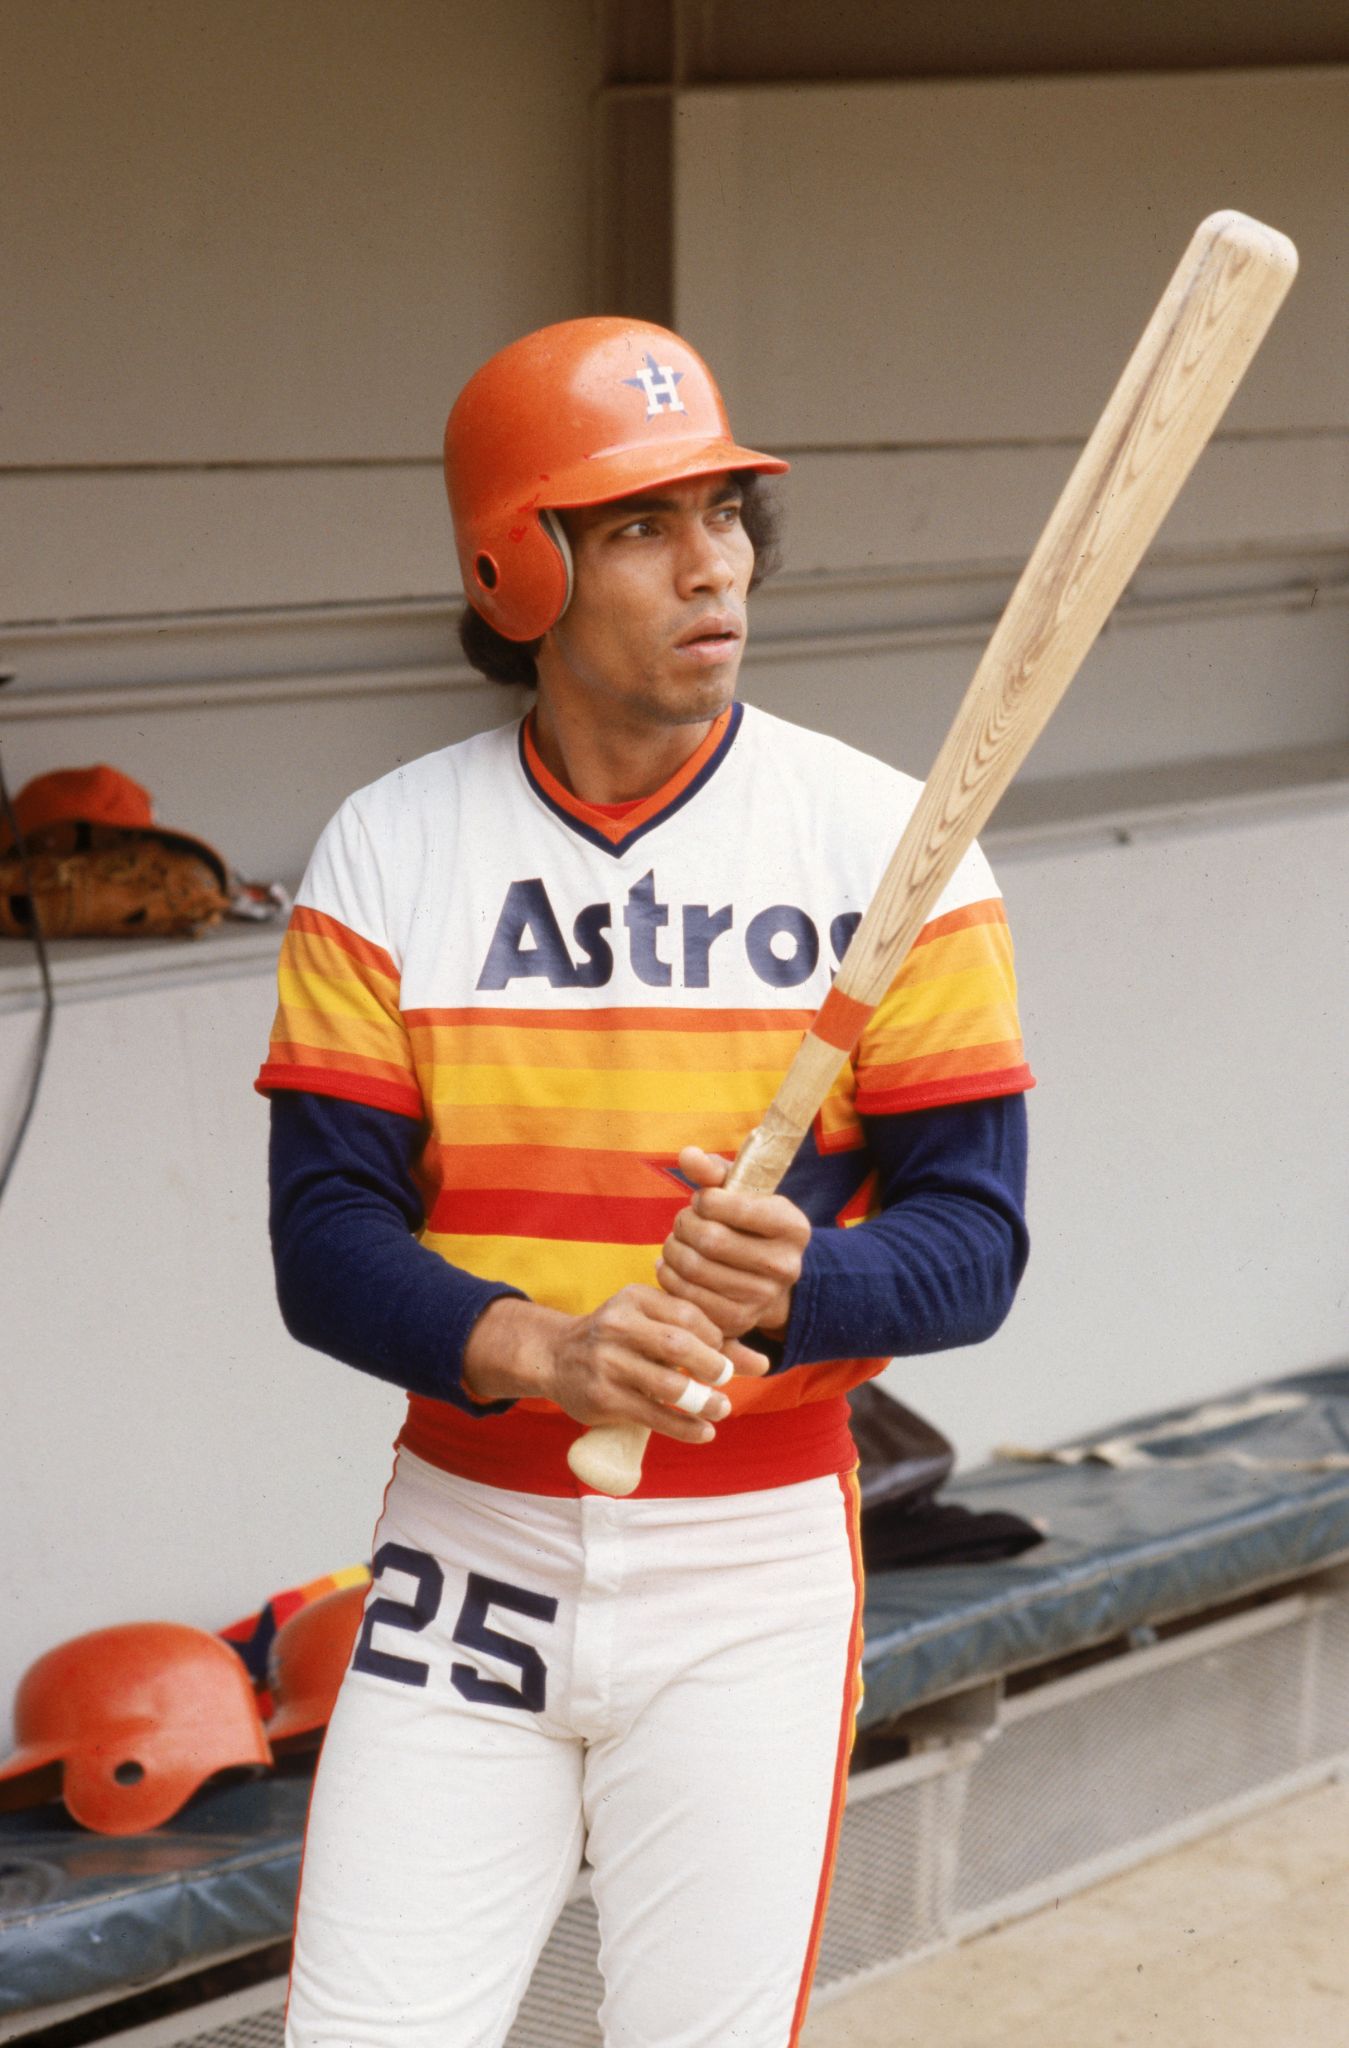 Houston Astros - Happy birthday to #Astros legend, Jose Cruz